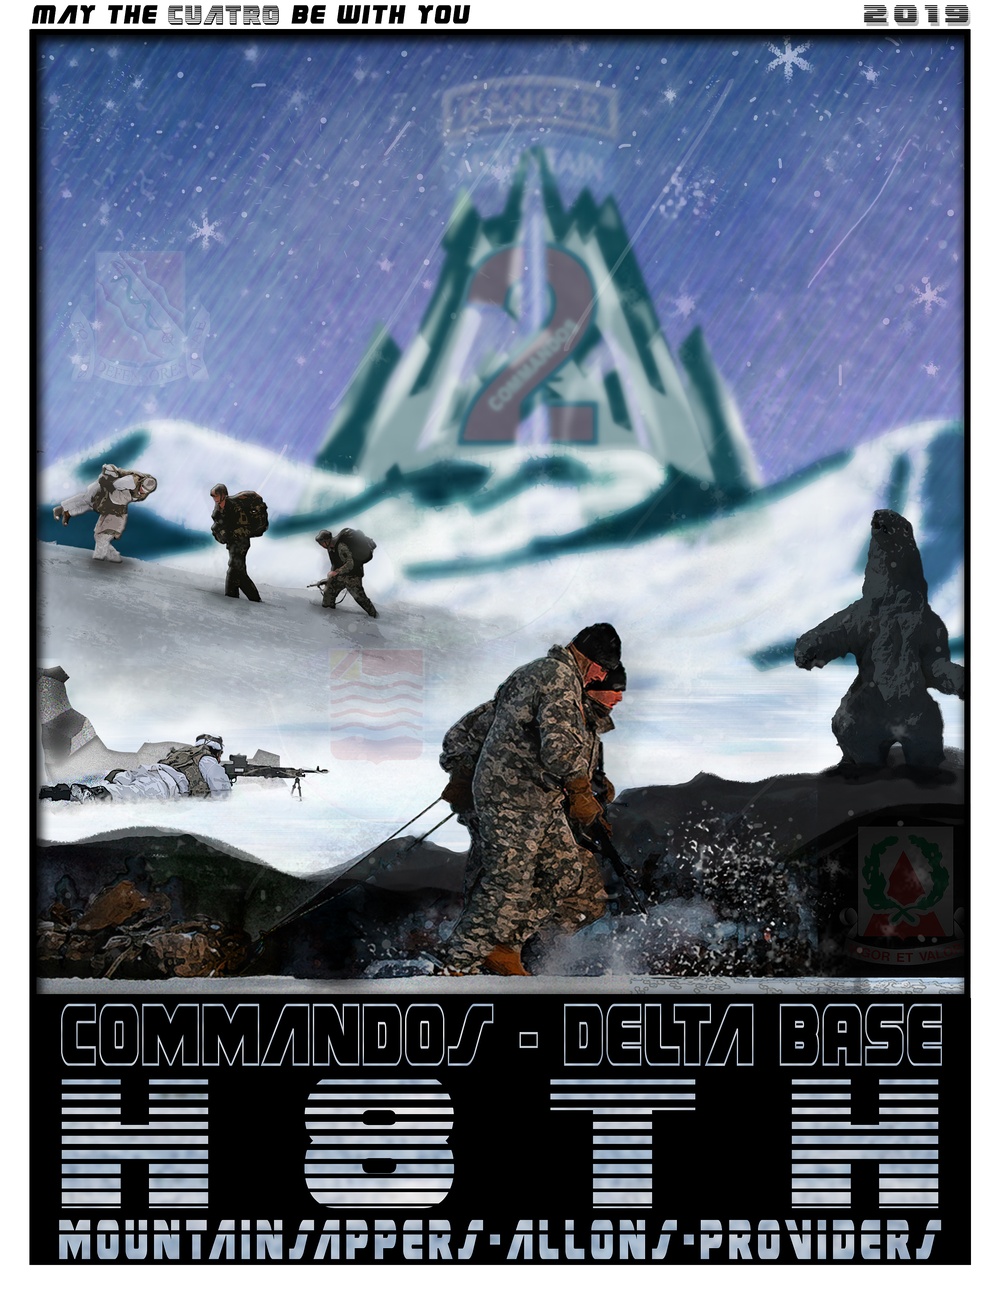 Commandos across the galaxy